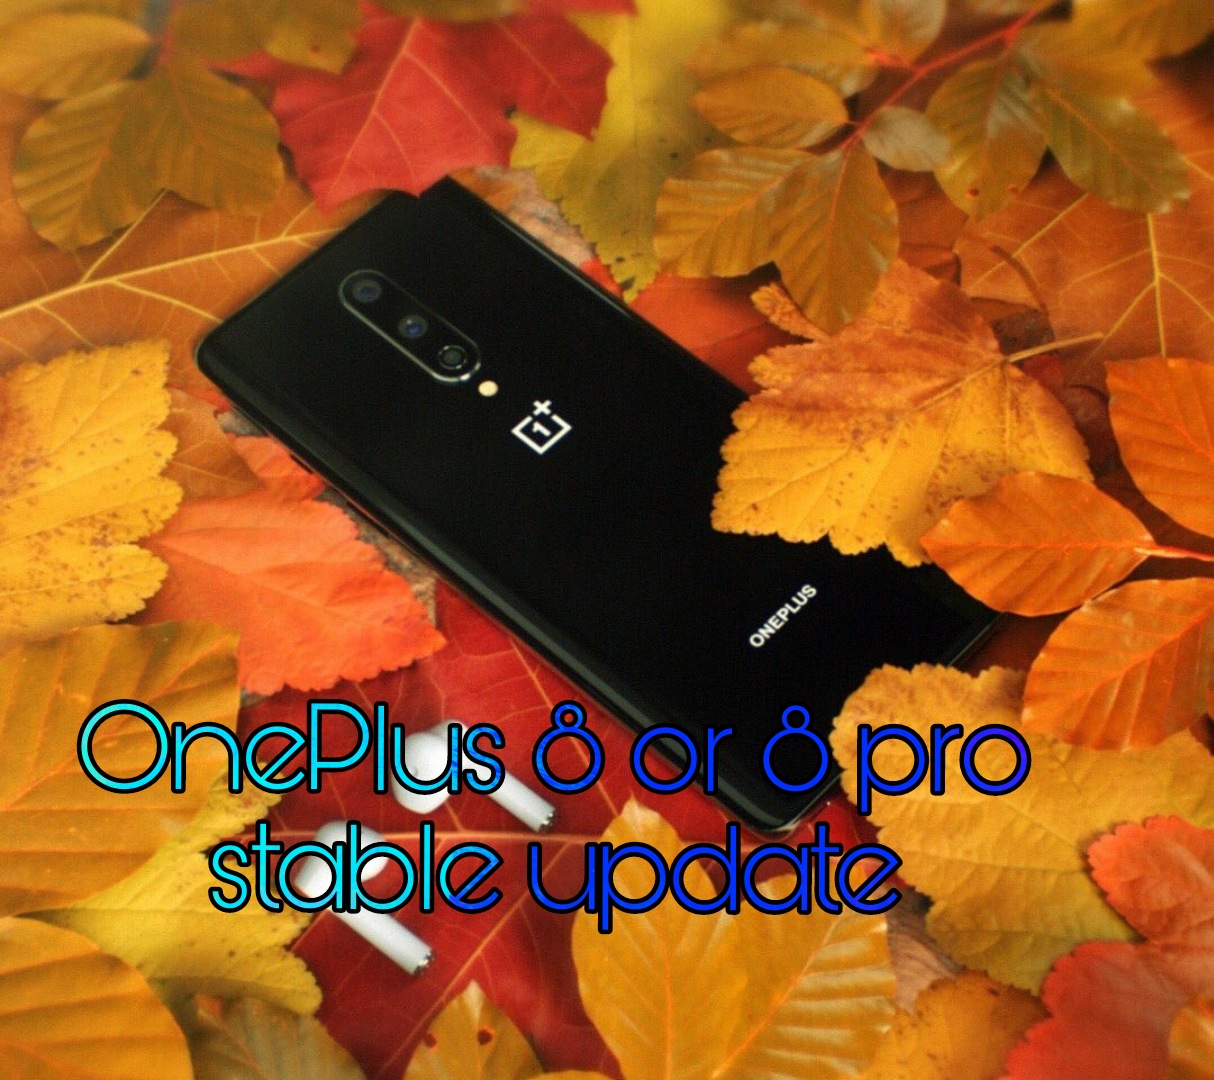 OnePlus 8 or Oneplus 8 pro